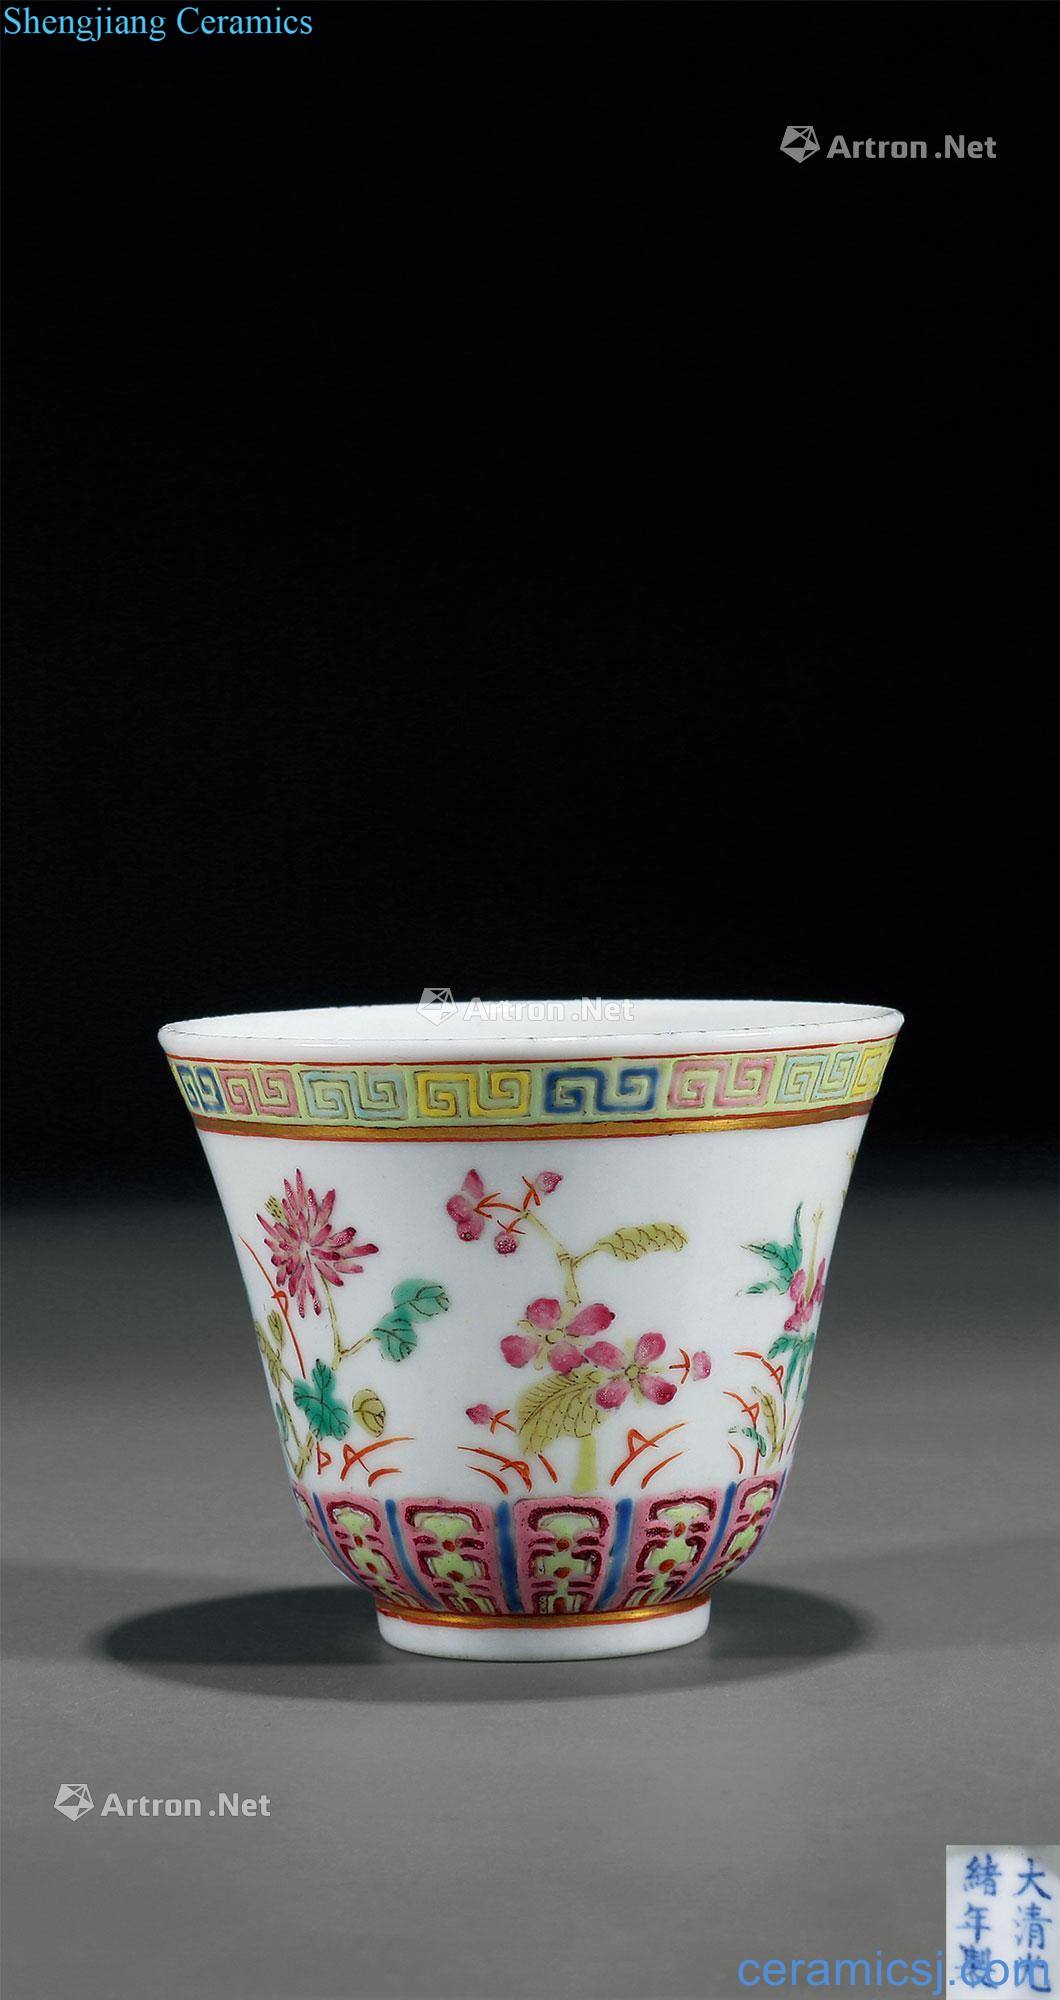 Pastel flowers reign of qing emperor guangxu grain cup